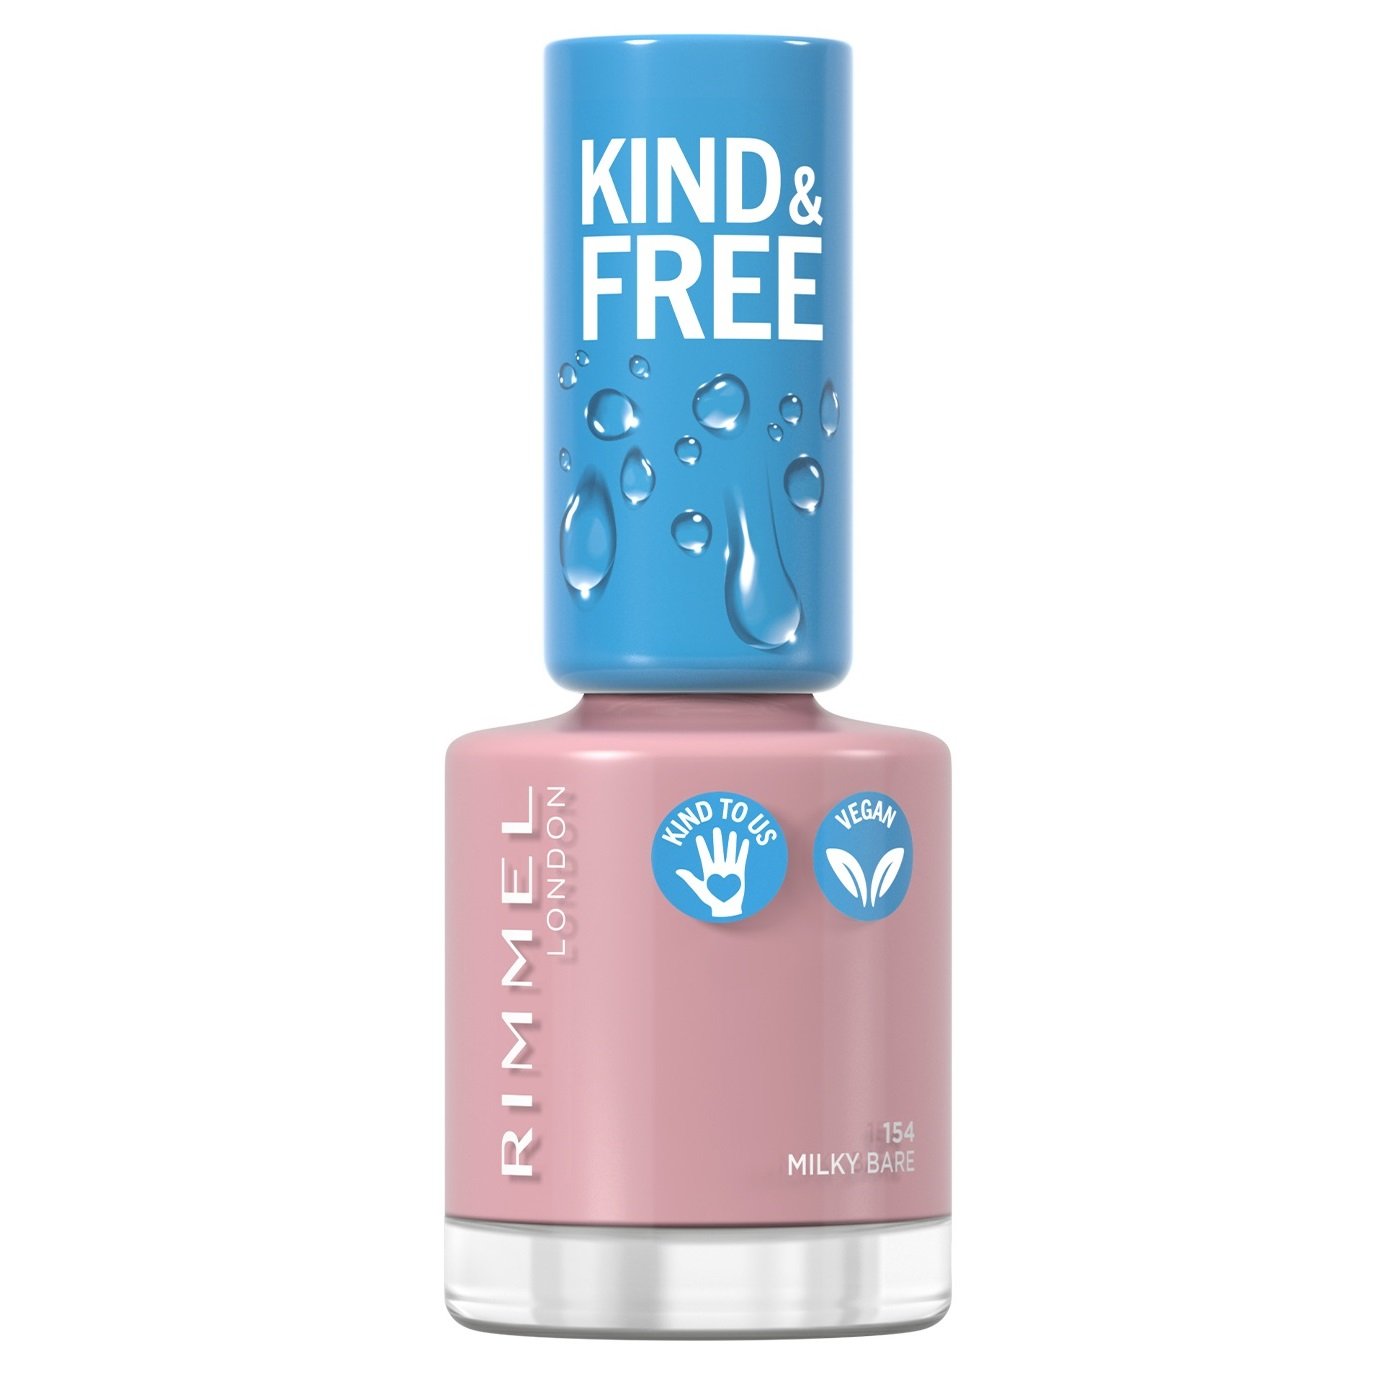 Лак для ногтей Rimmel Kind&Free, тон 154 (Milky Bare), 8 мл (8000019959400) - фото 1